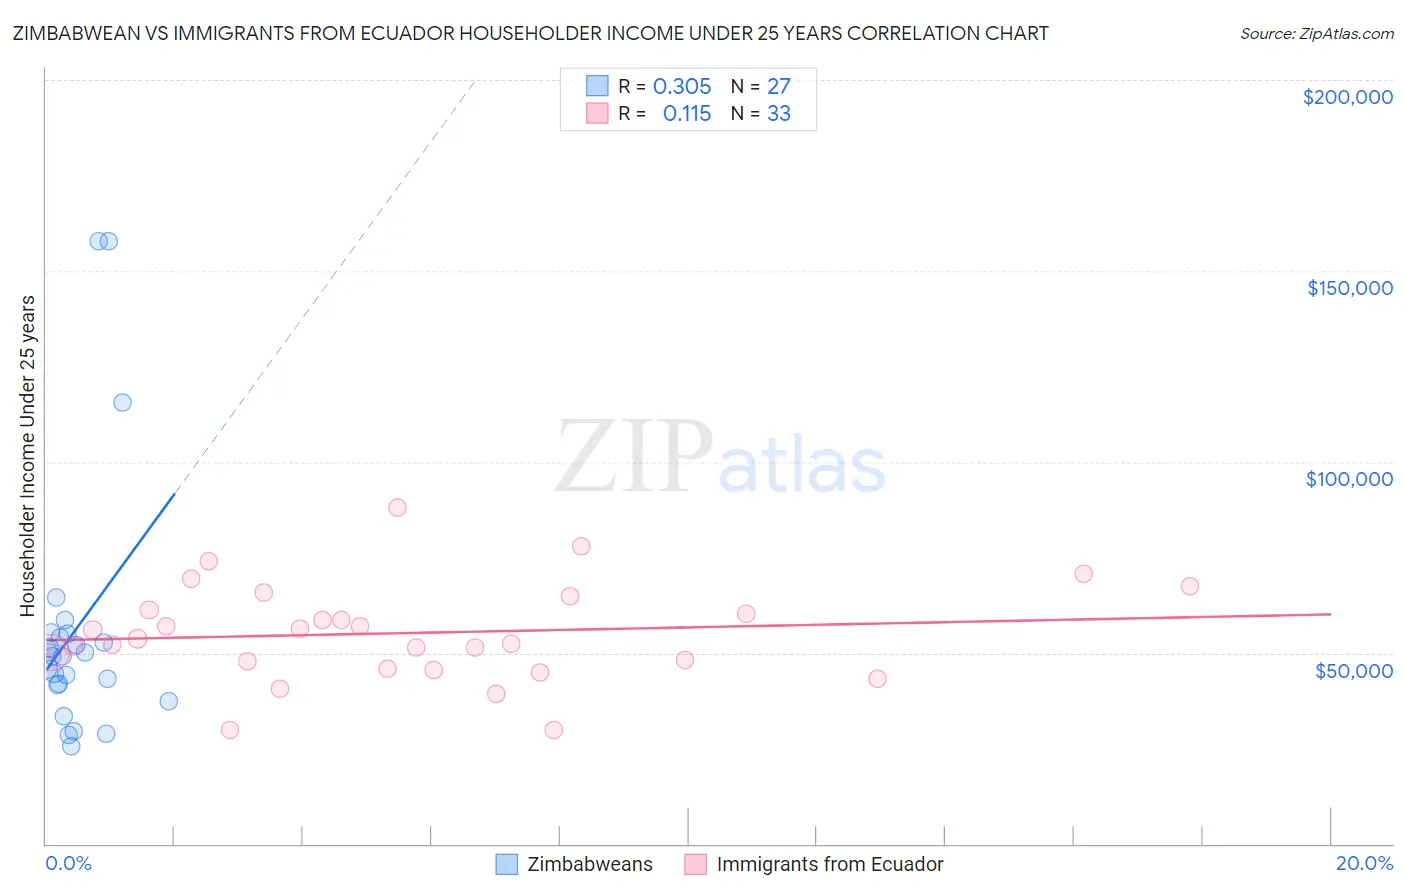 Zimbabwean vs Immigrants from Ecuador Householder Income Under 25 years